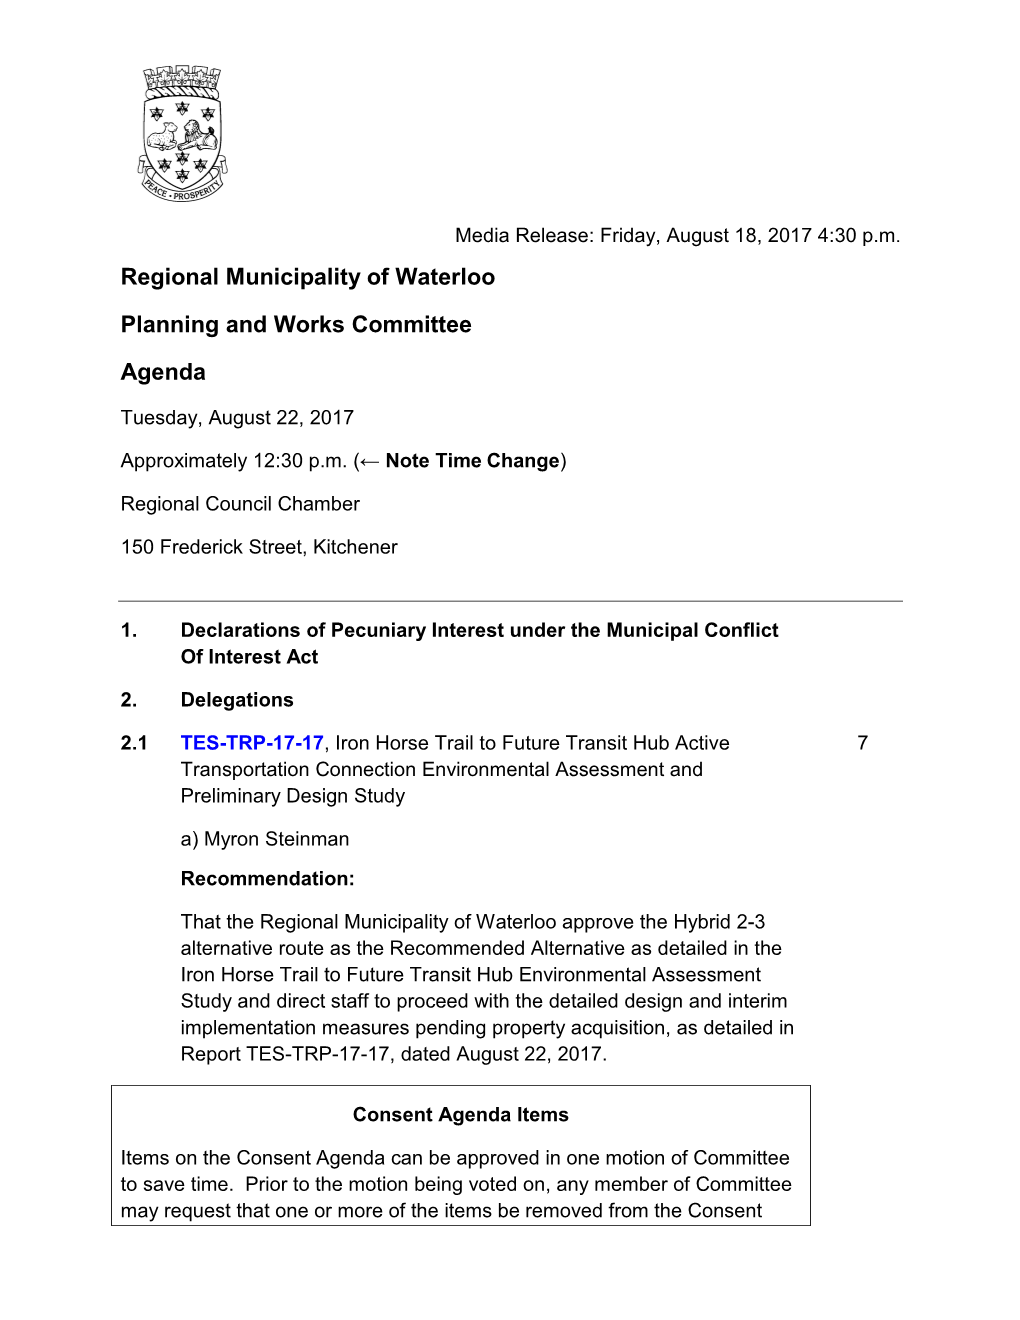 Regional Municipality of Waterloo Planning and Works Committee Agenda